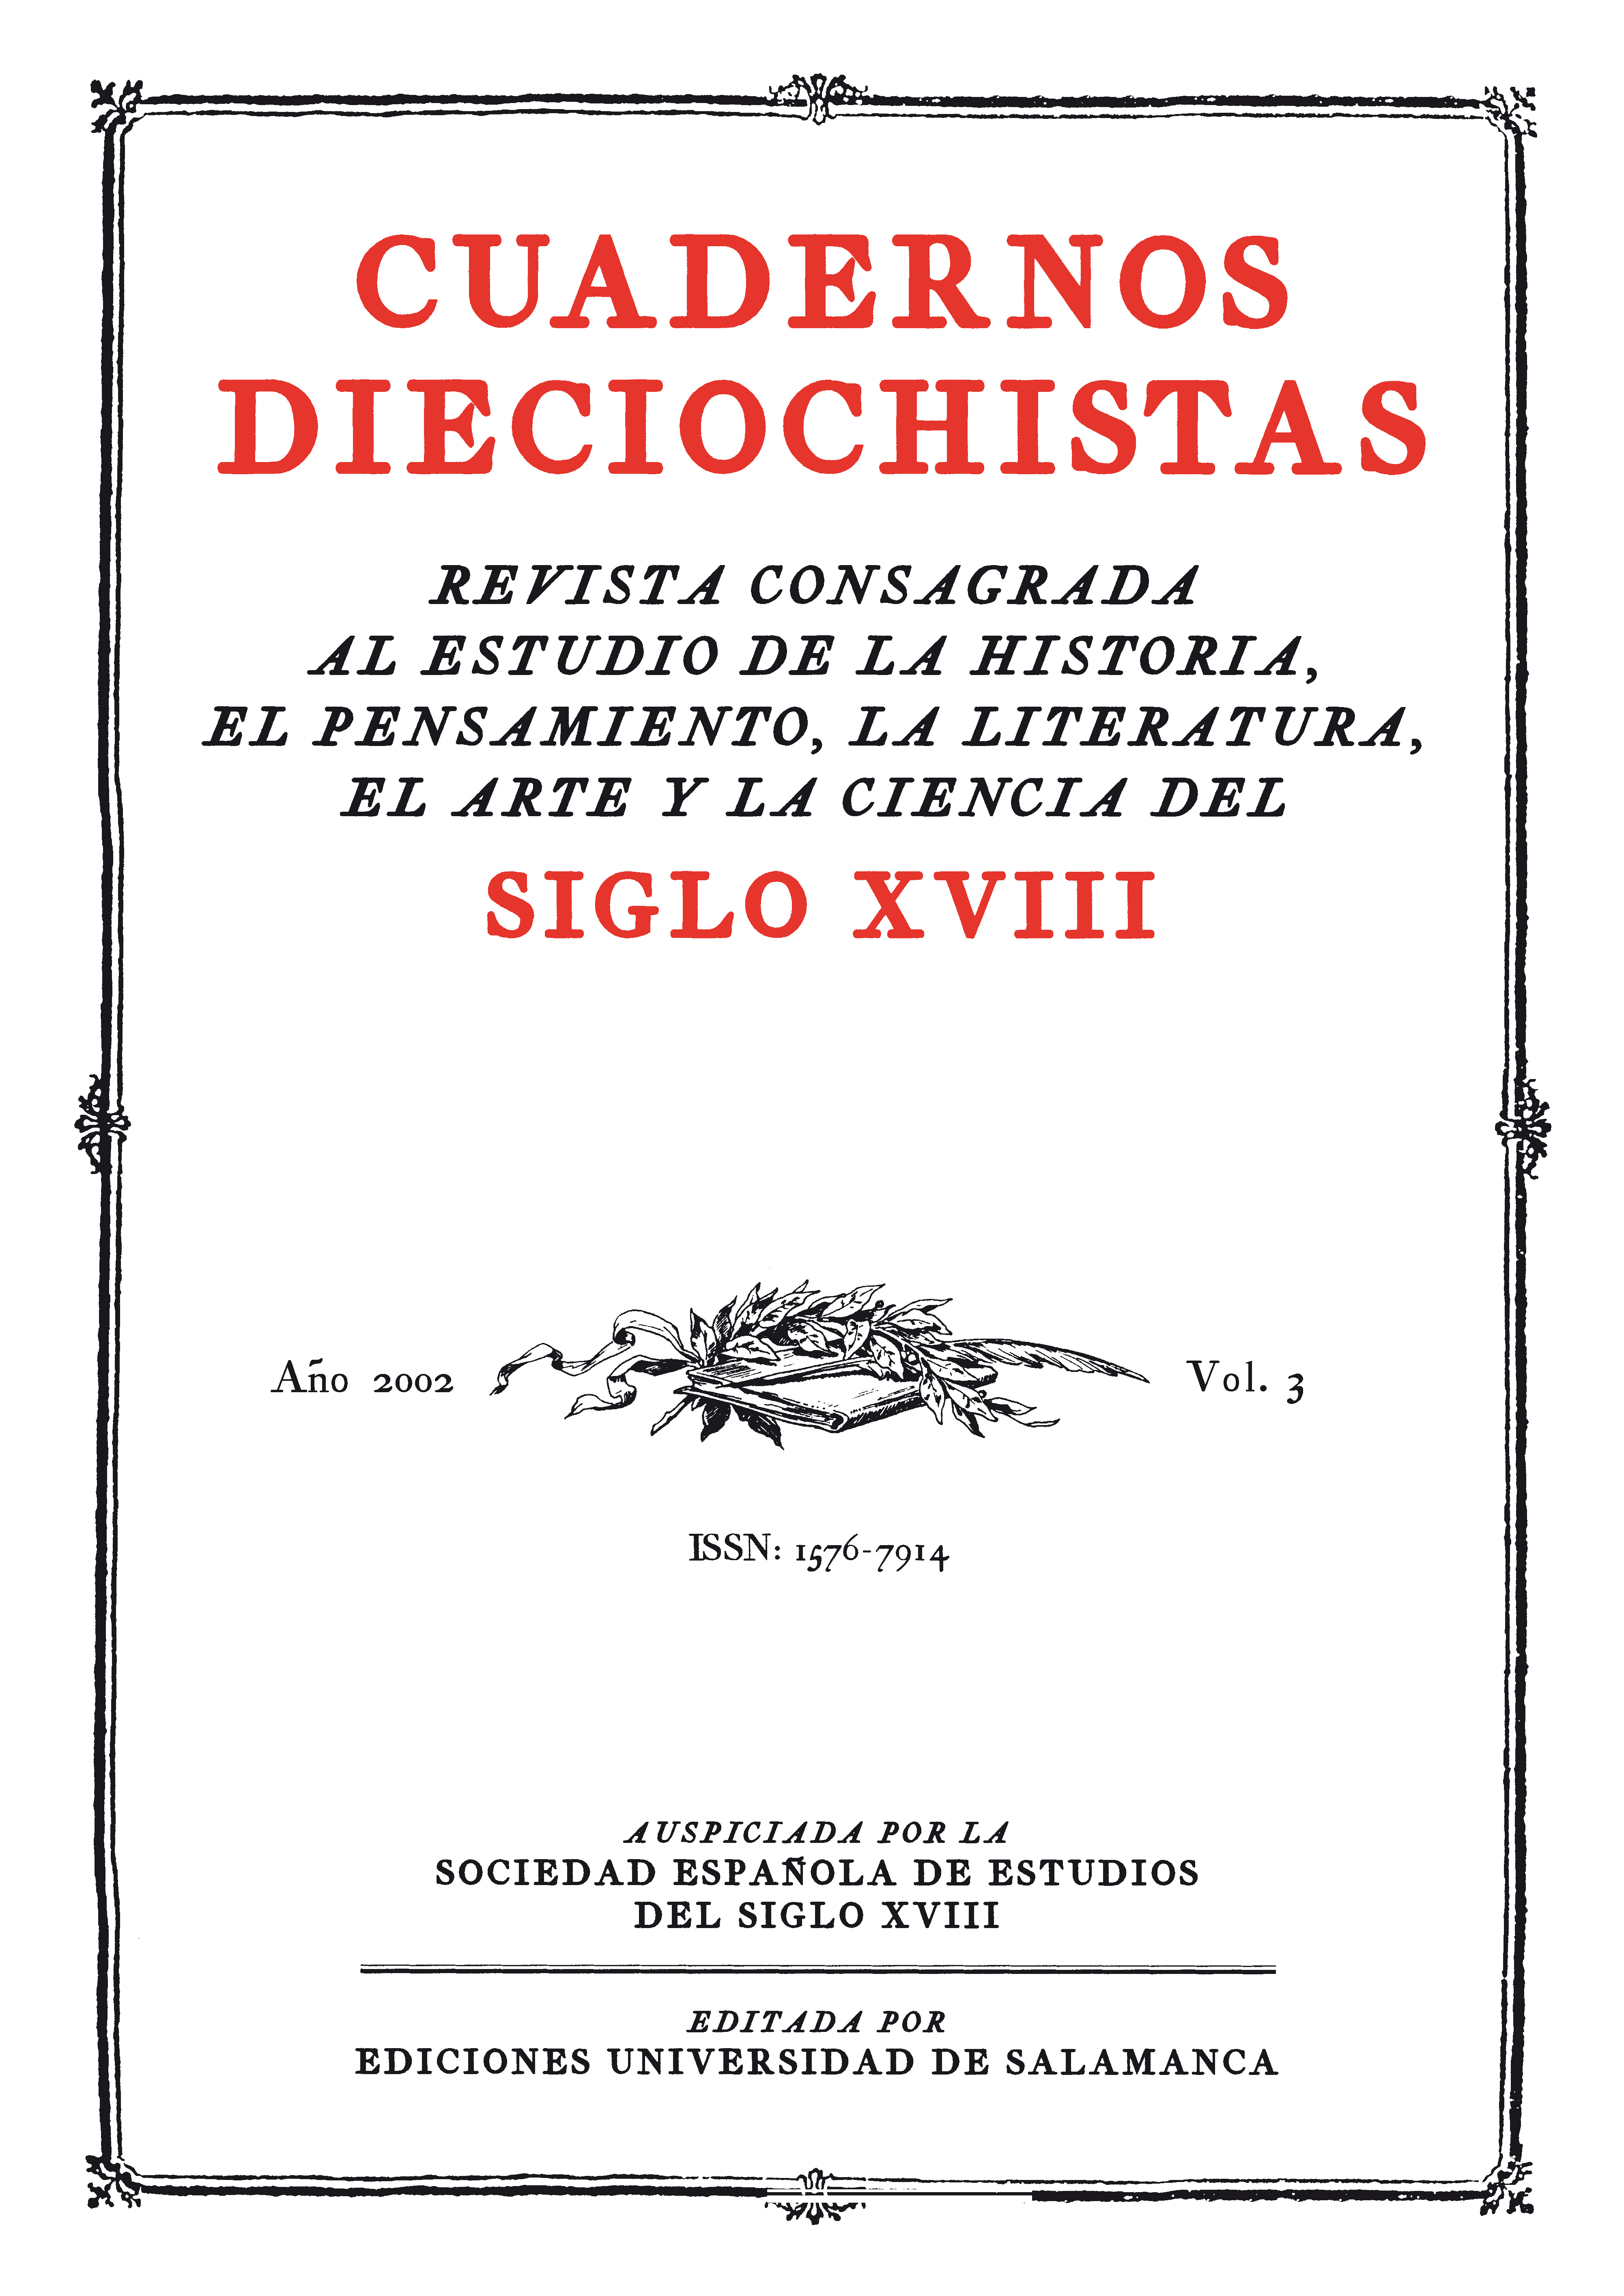                         Ver Vol. 3 (2002): Miscelánea Dieciochista
                    